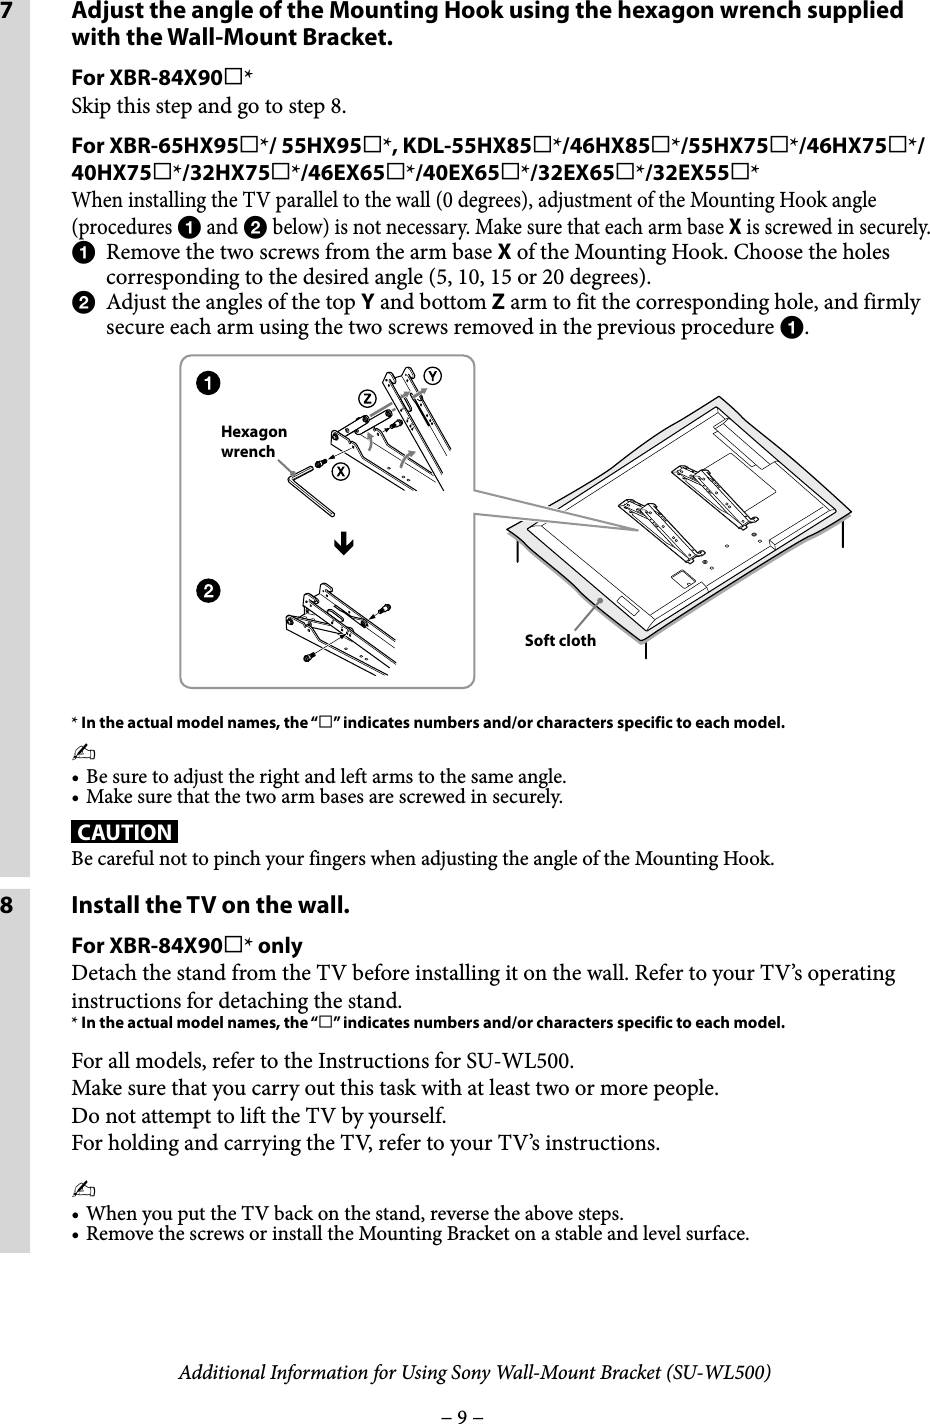 Sony XBR 84X900 SU WL500 User Manual Additional Information For 